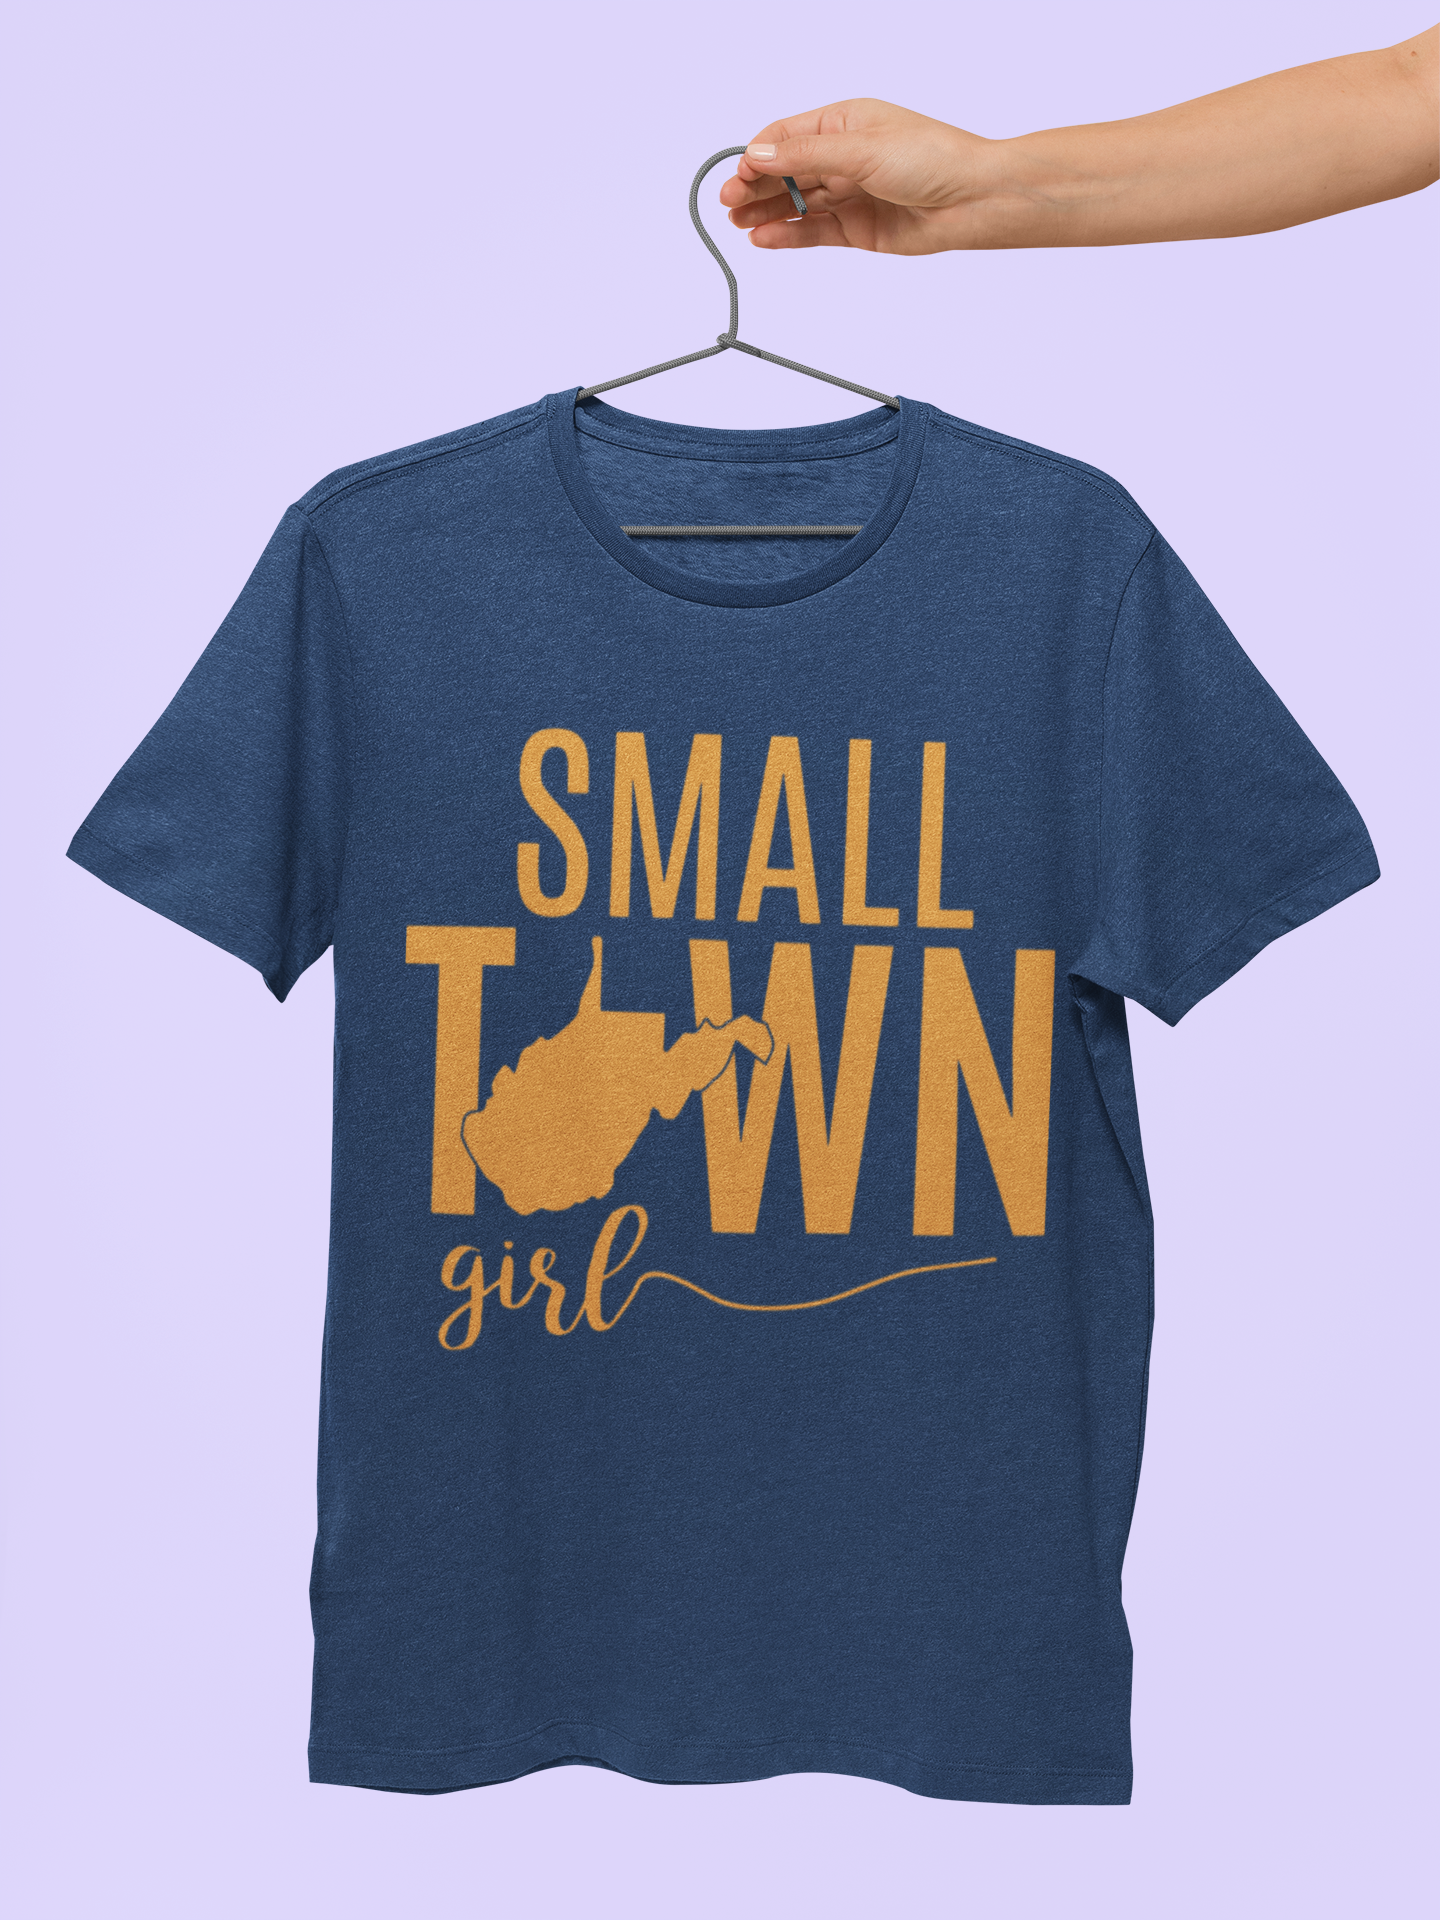 Small Town Girl Shirt